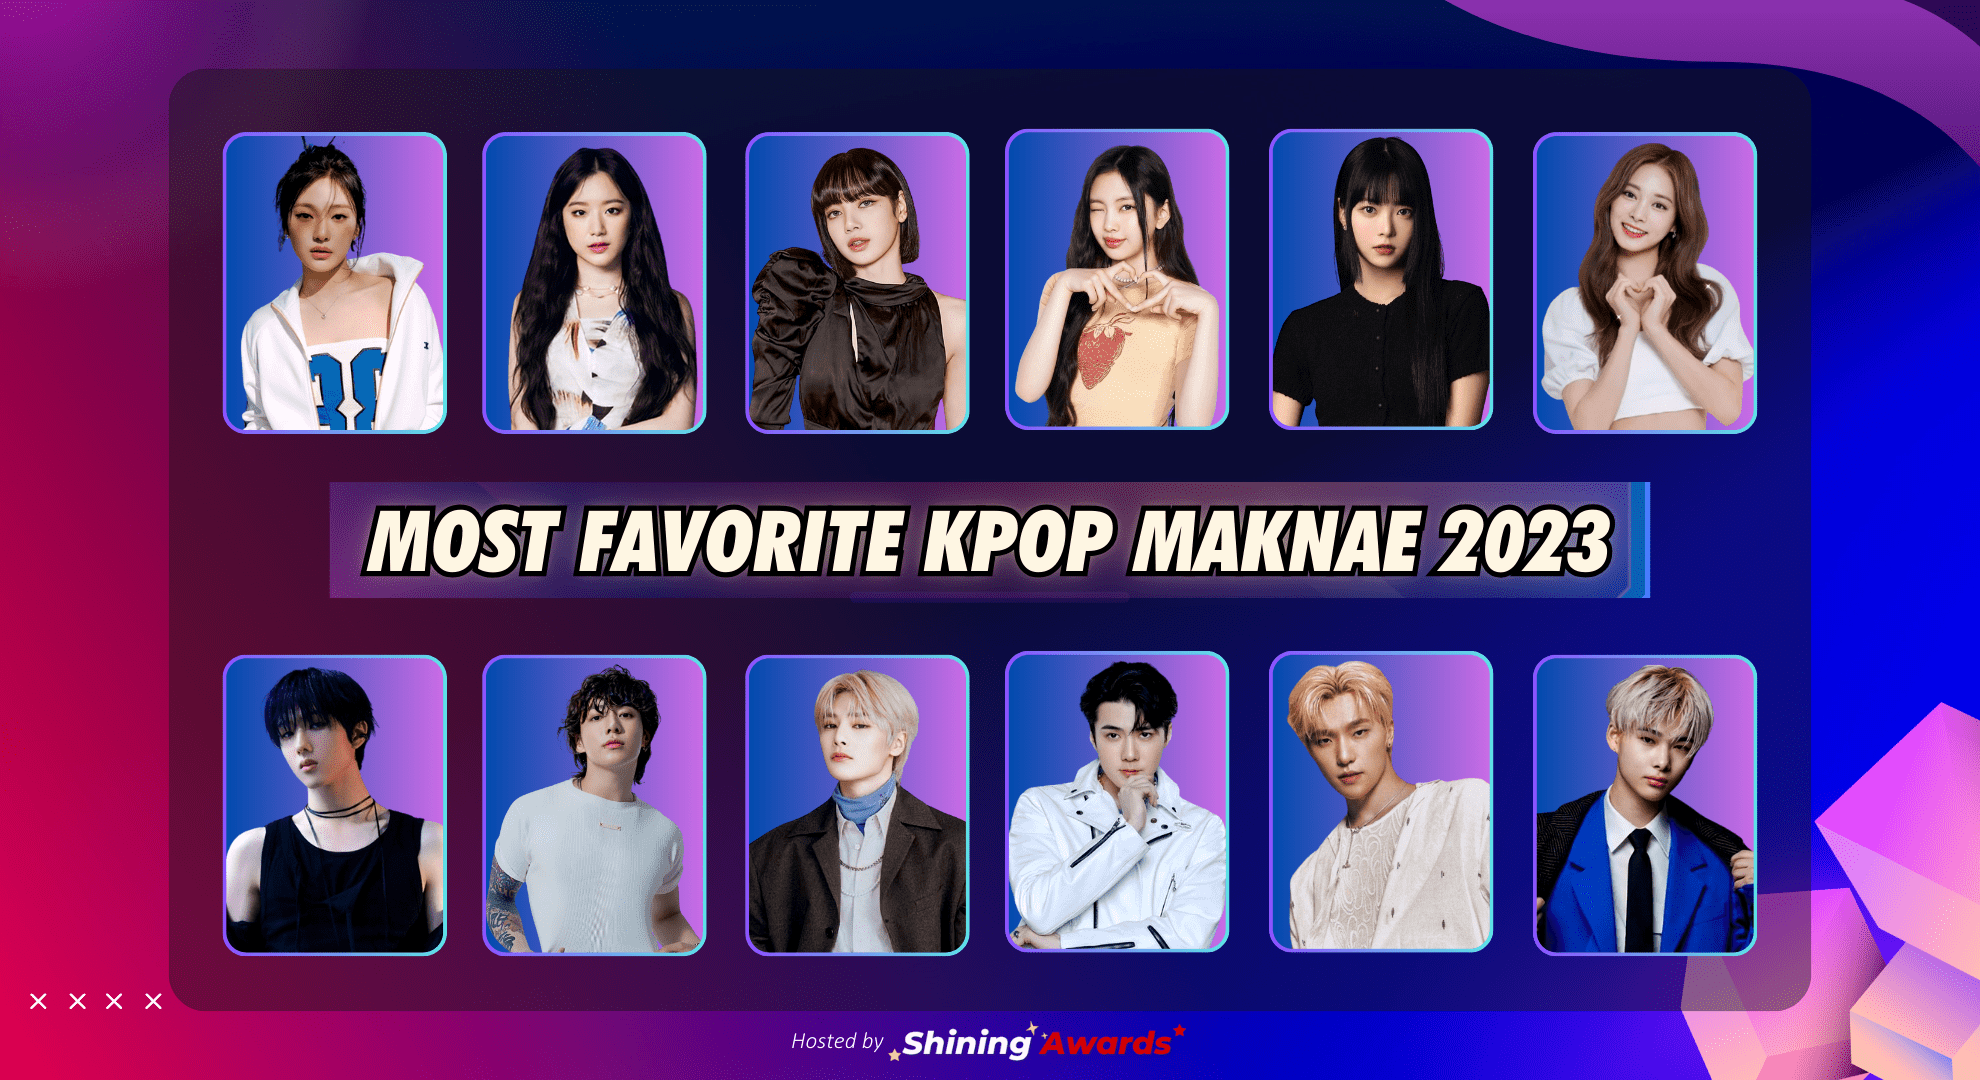 Most Favorite Kpop Maknae 2023 Shining Awards